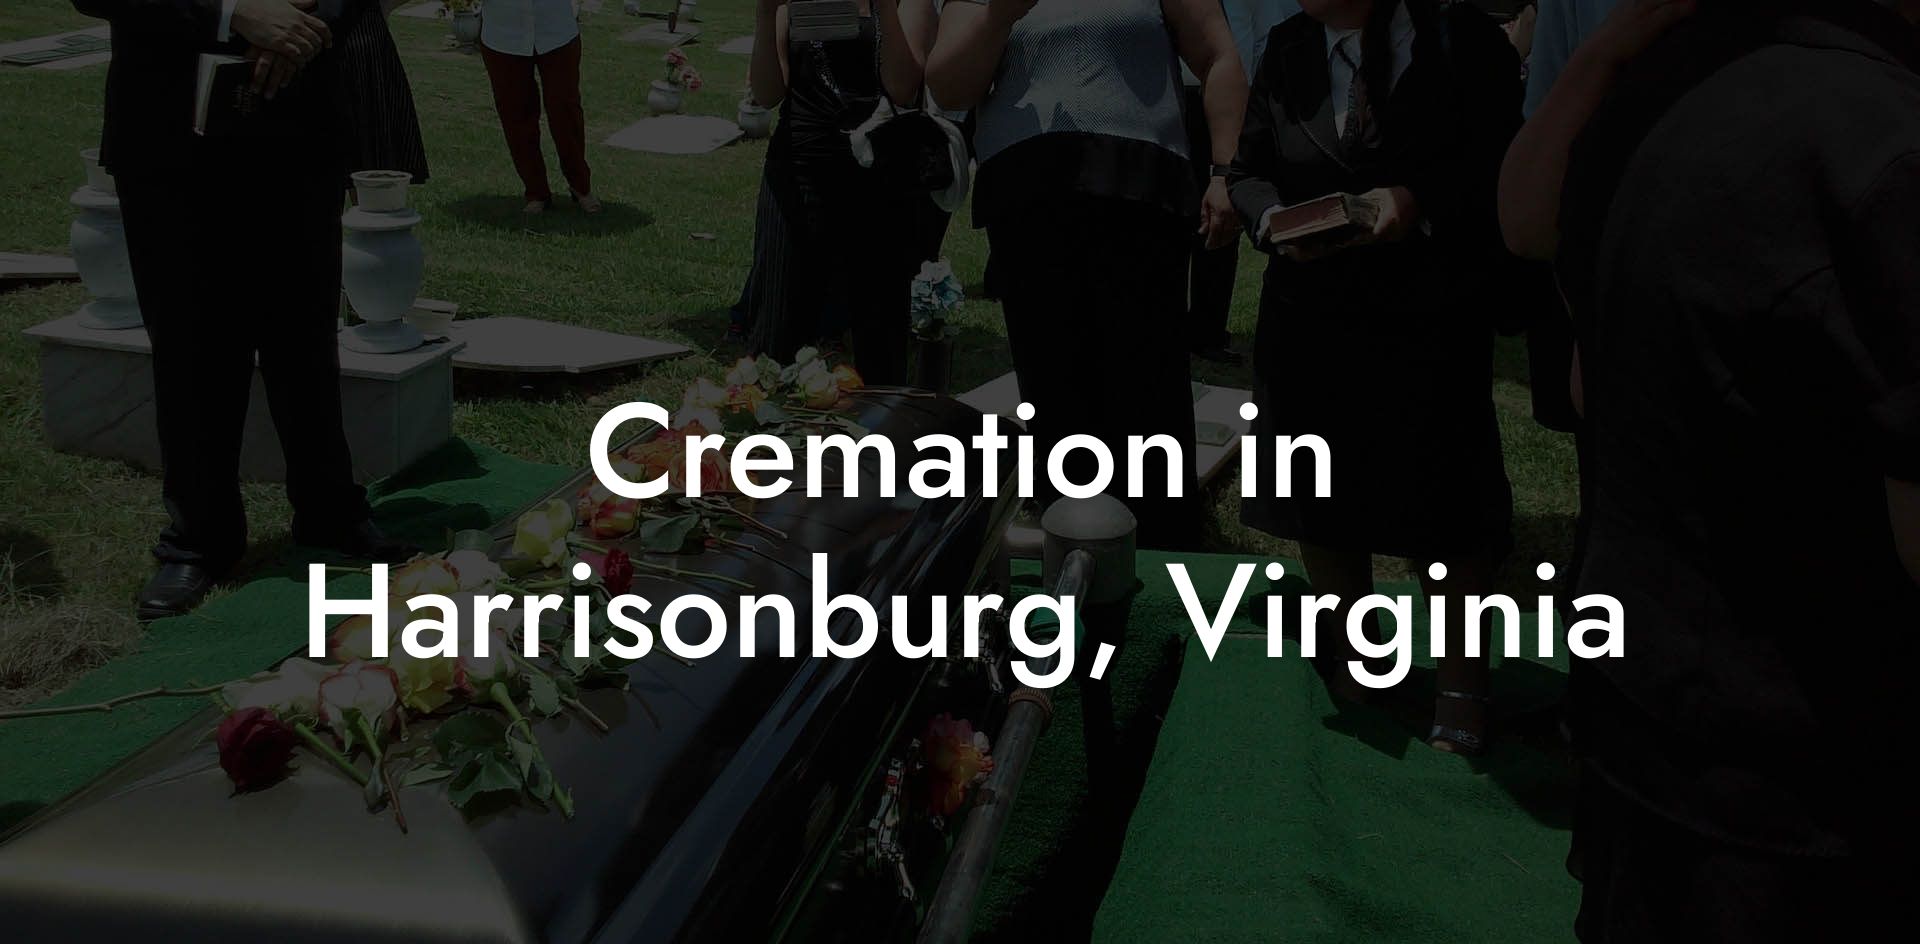 Cremation in Harrisonburg, Virginia